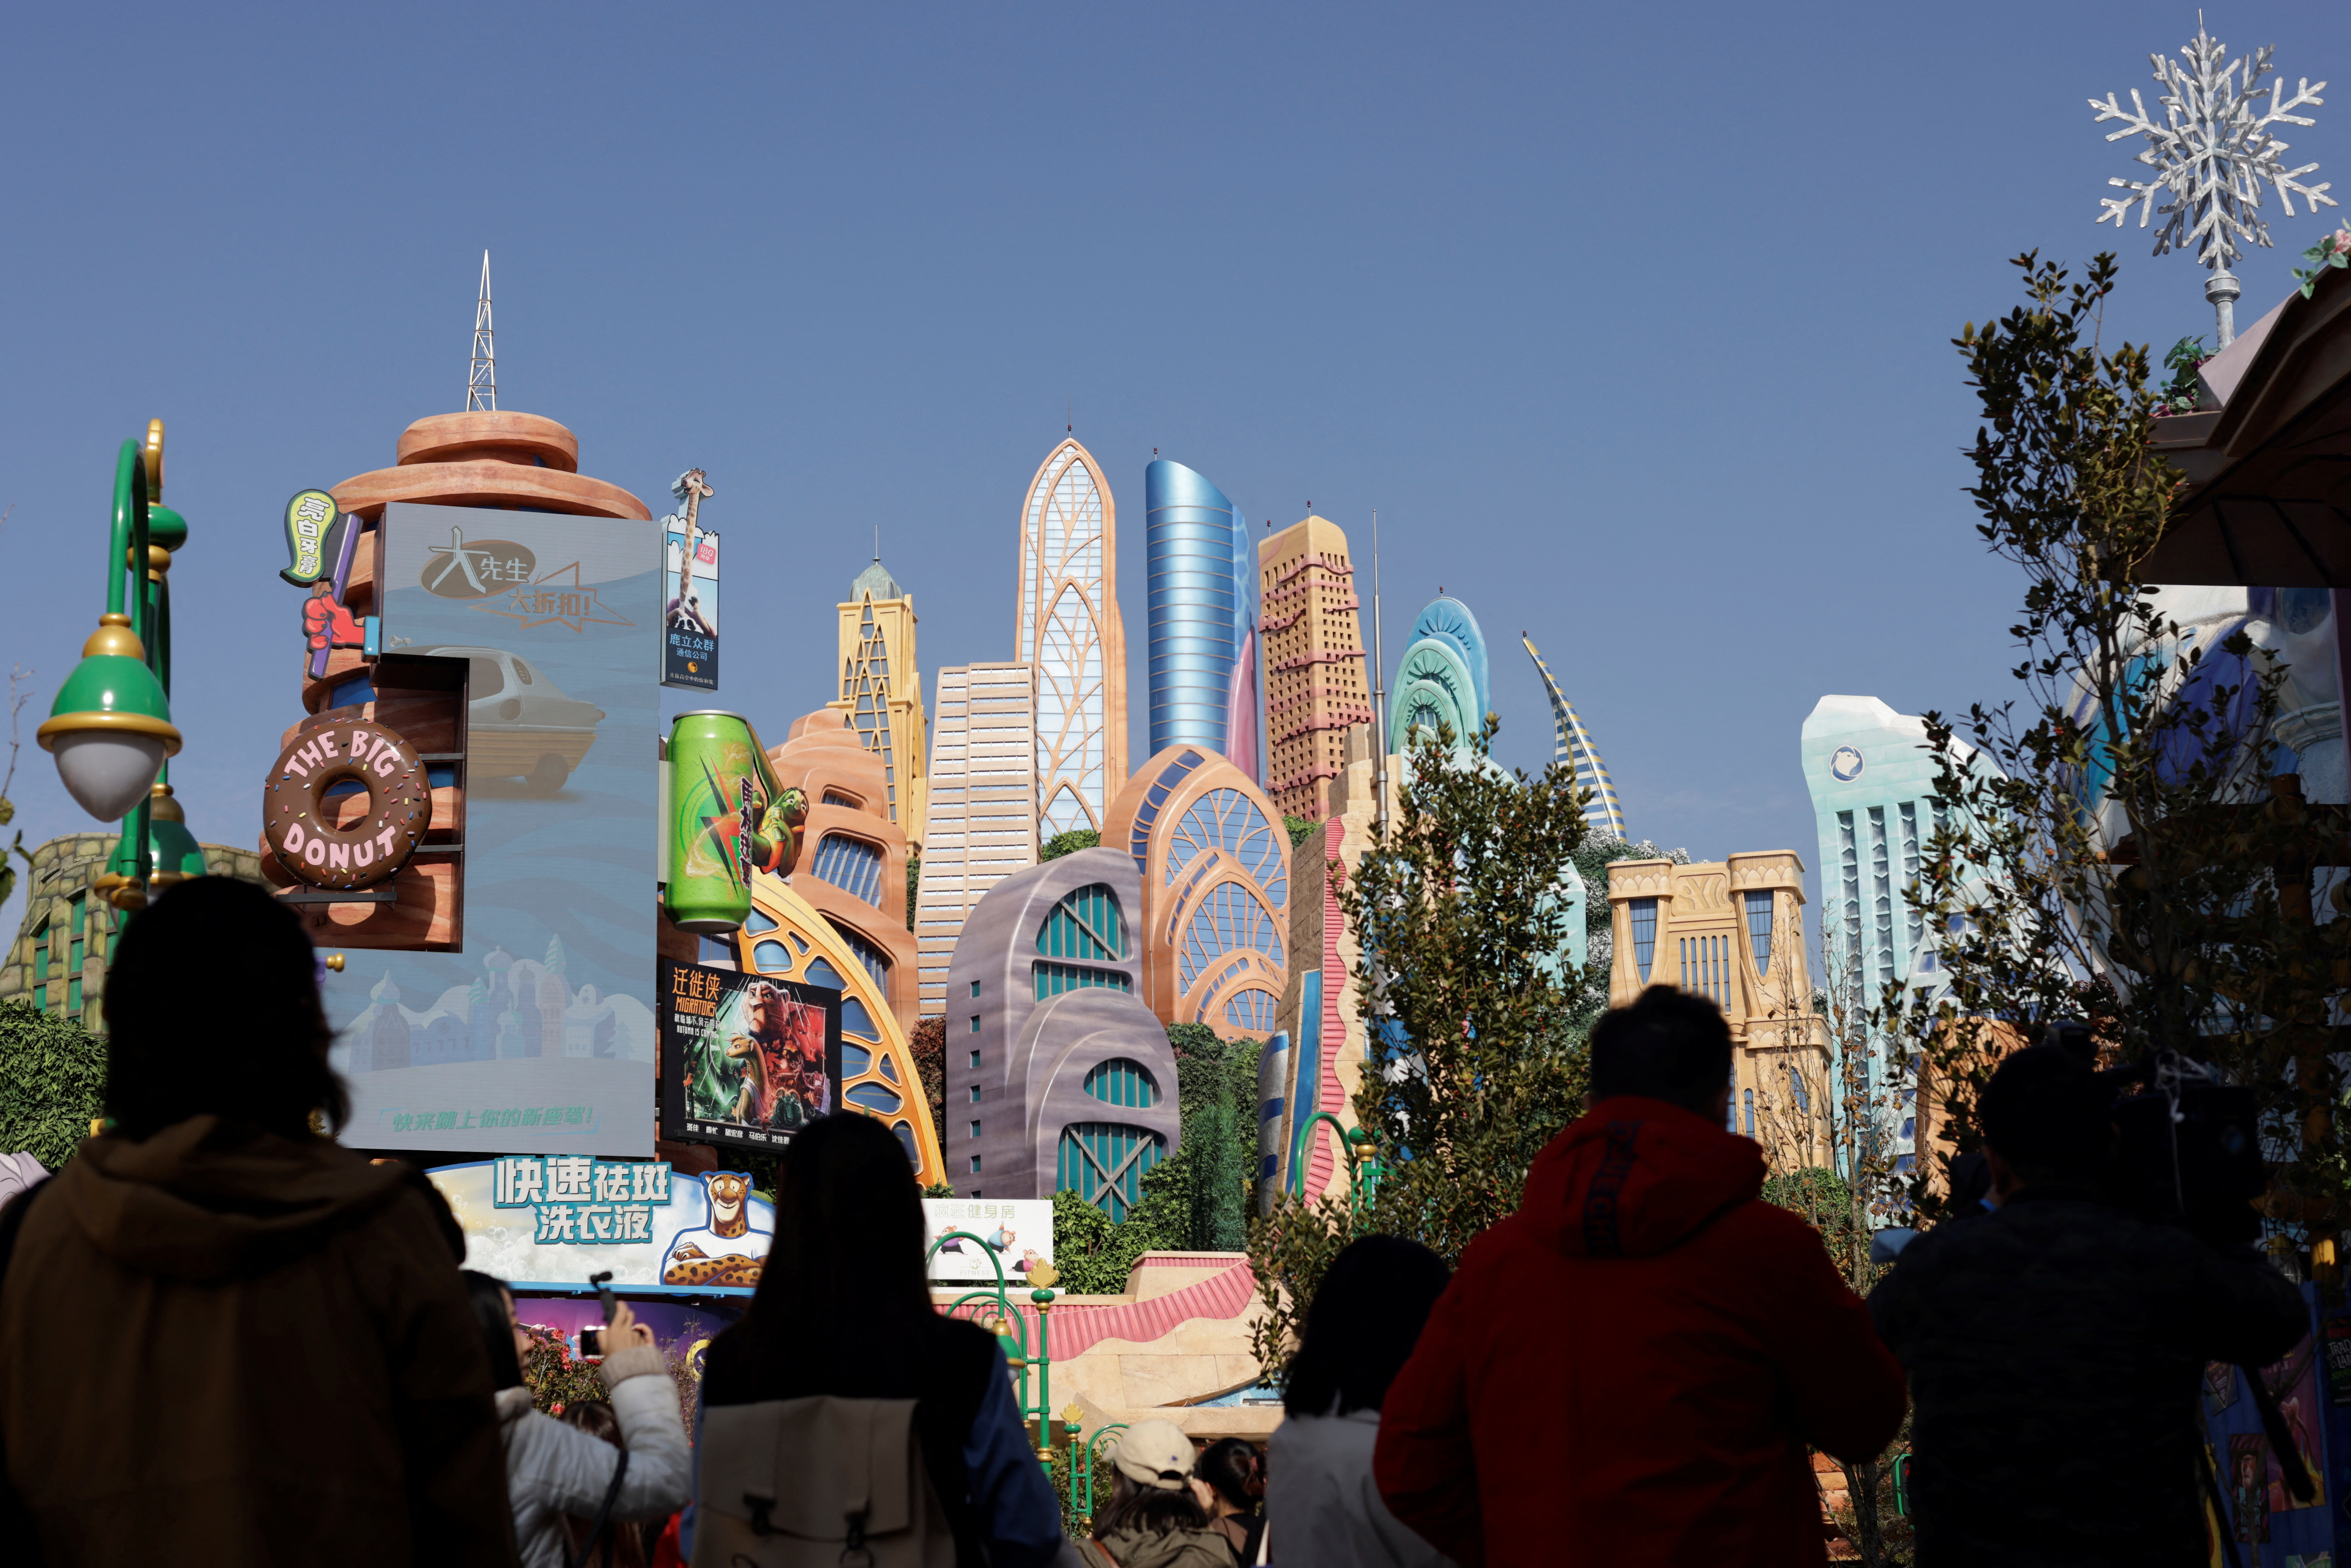 Zootopia Land opens at Shanghai Disneyland